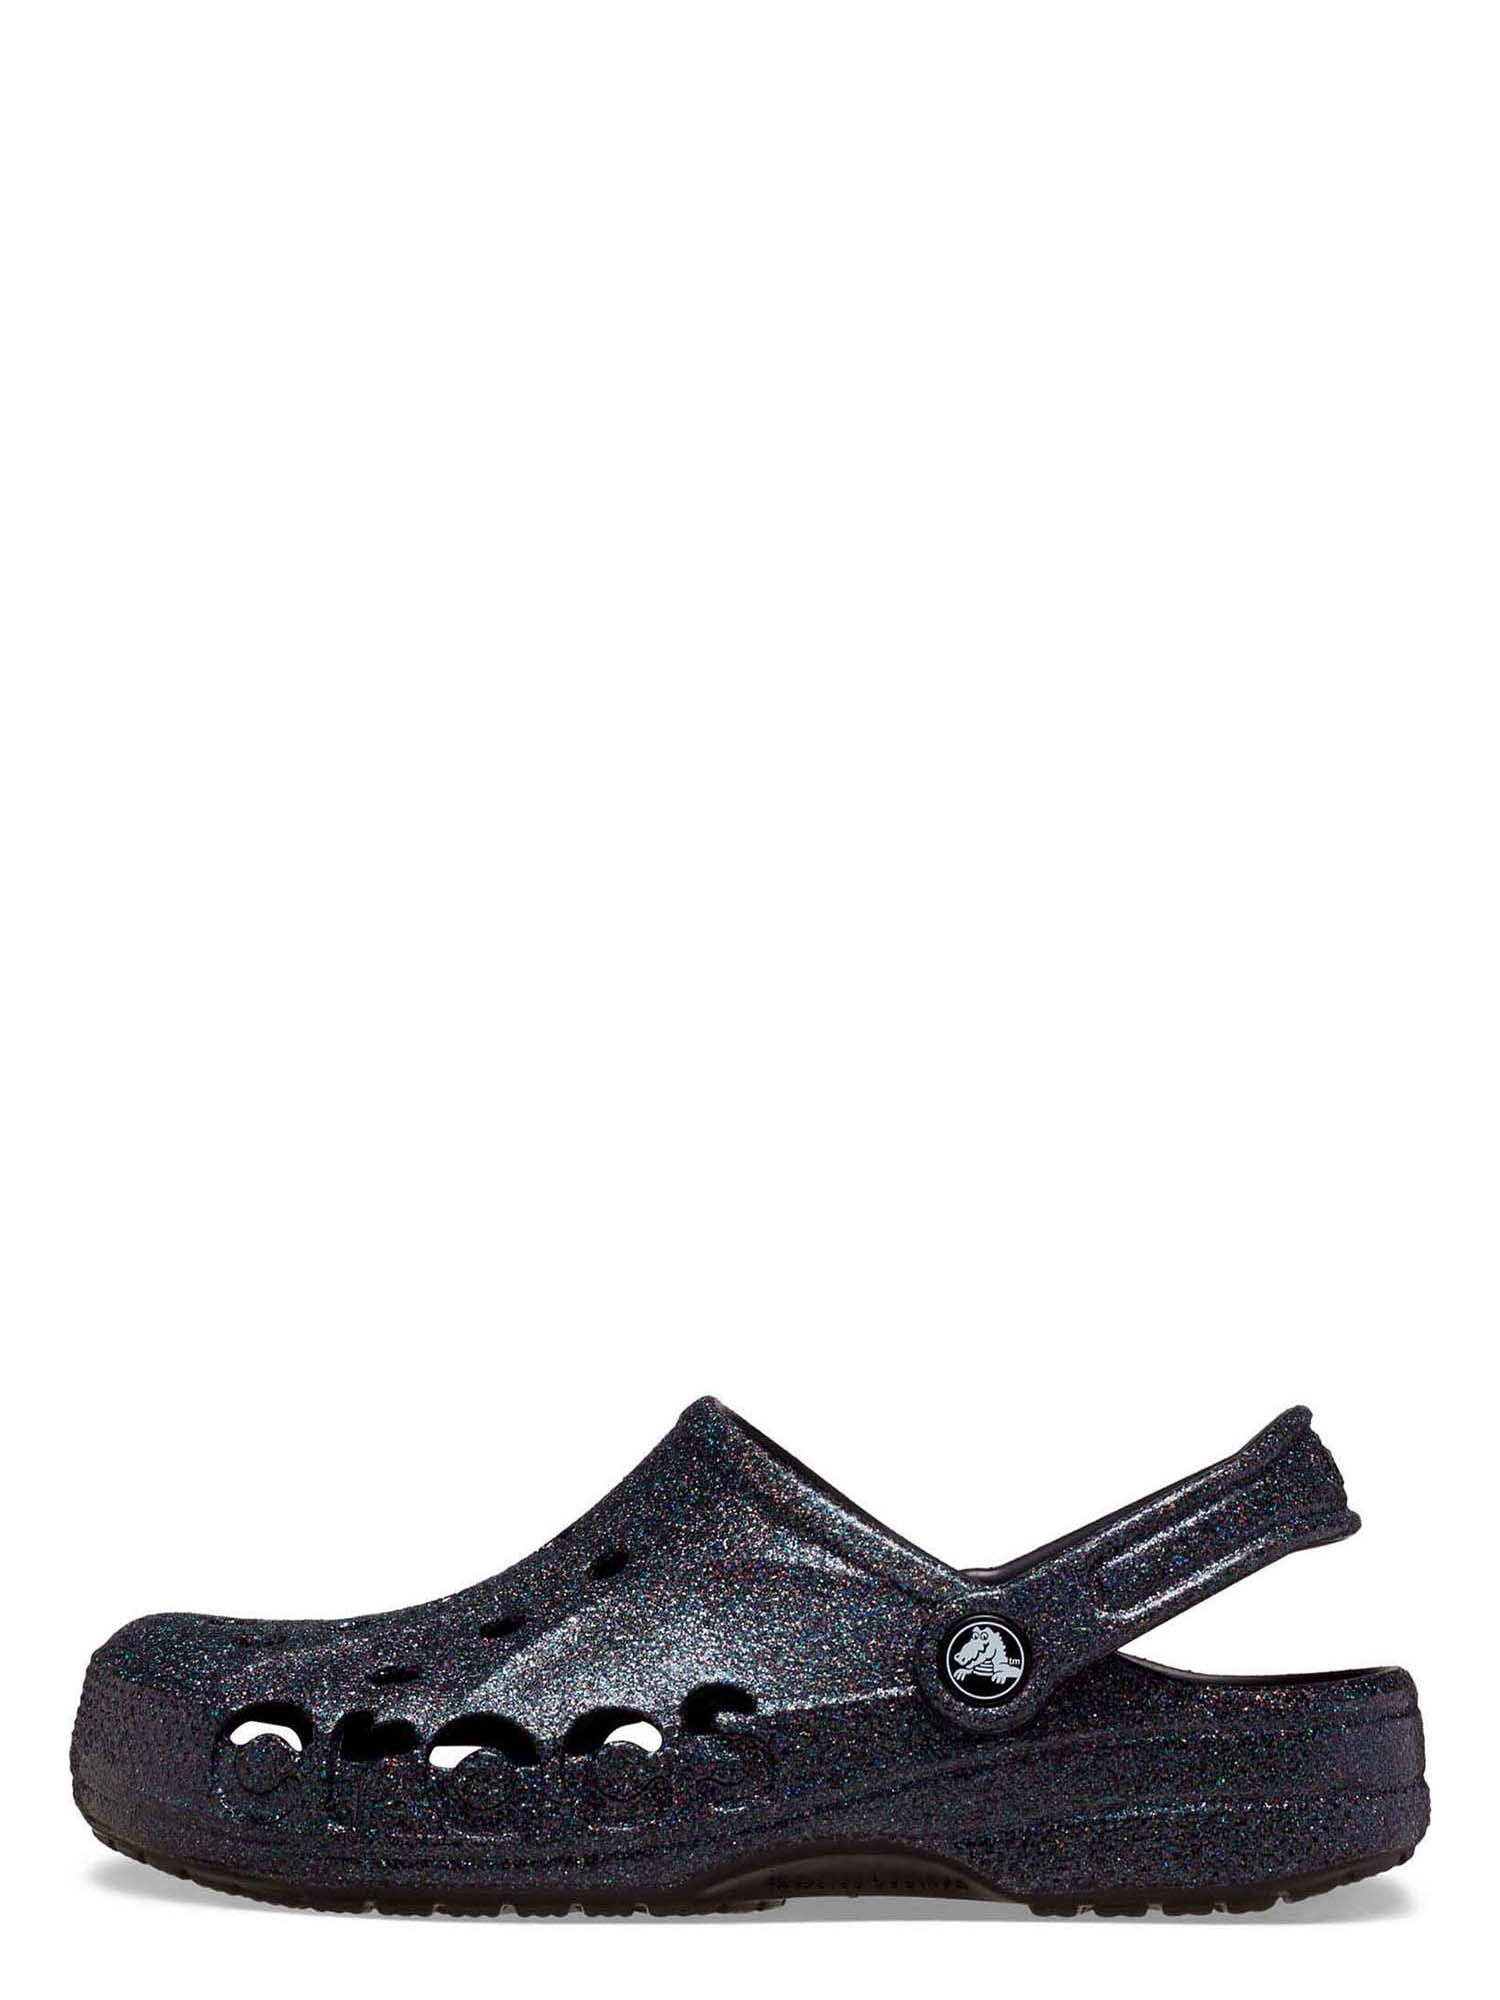 Crocs Unisex Baya Glitter Clog Sandal - image 4 of 7